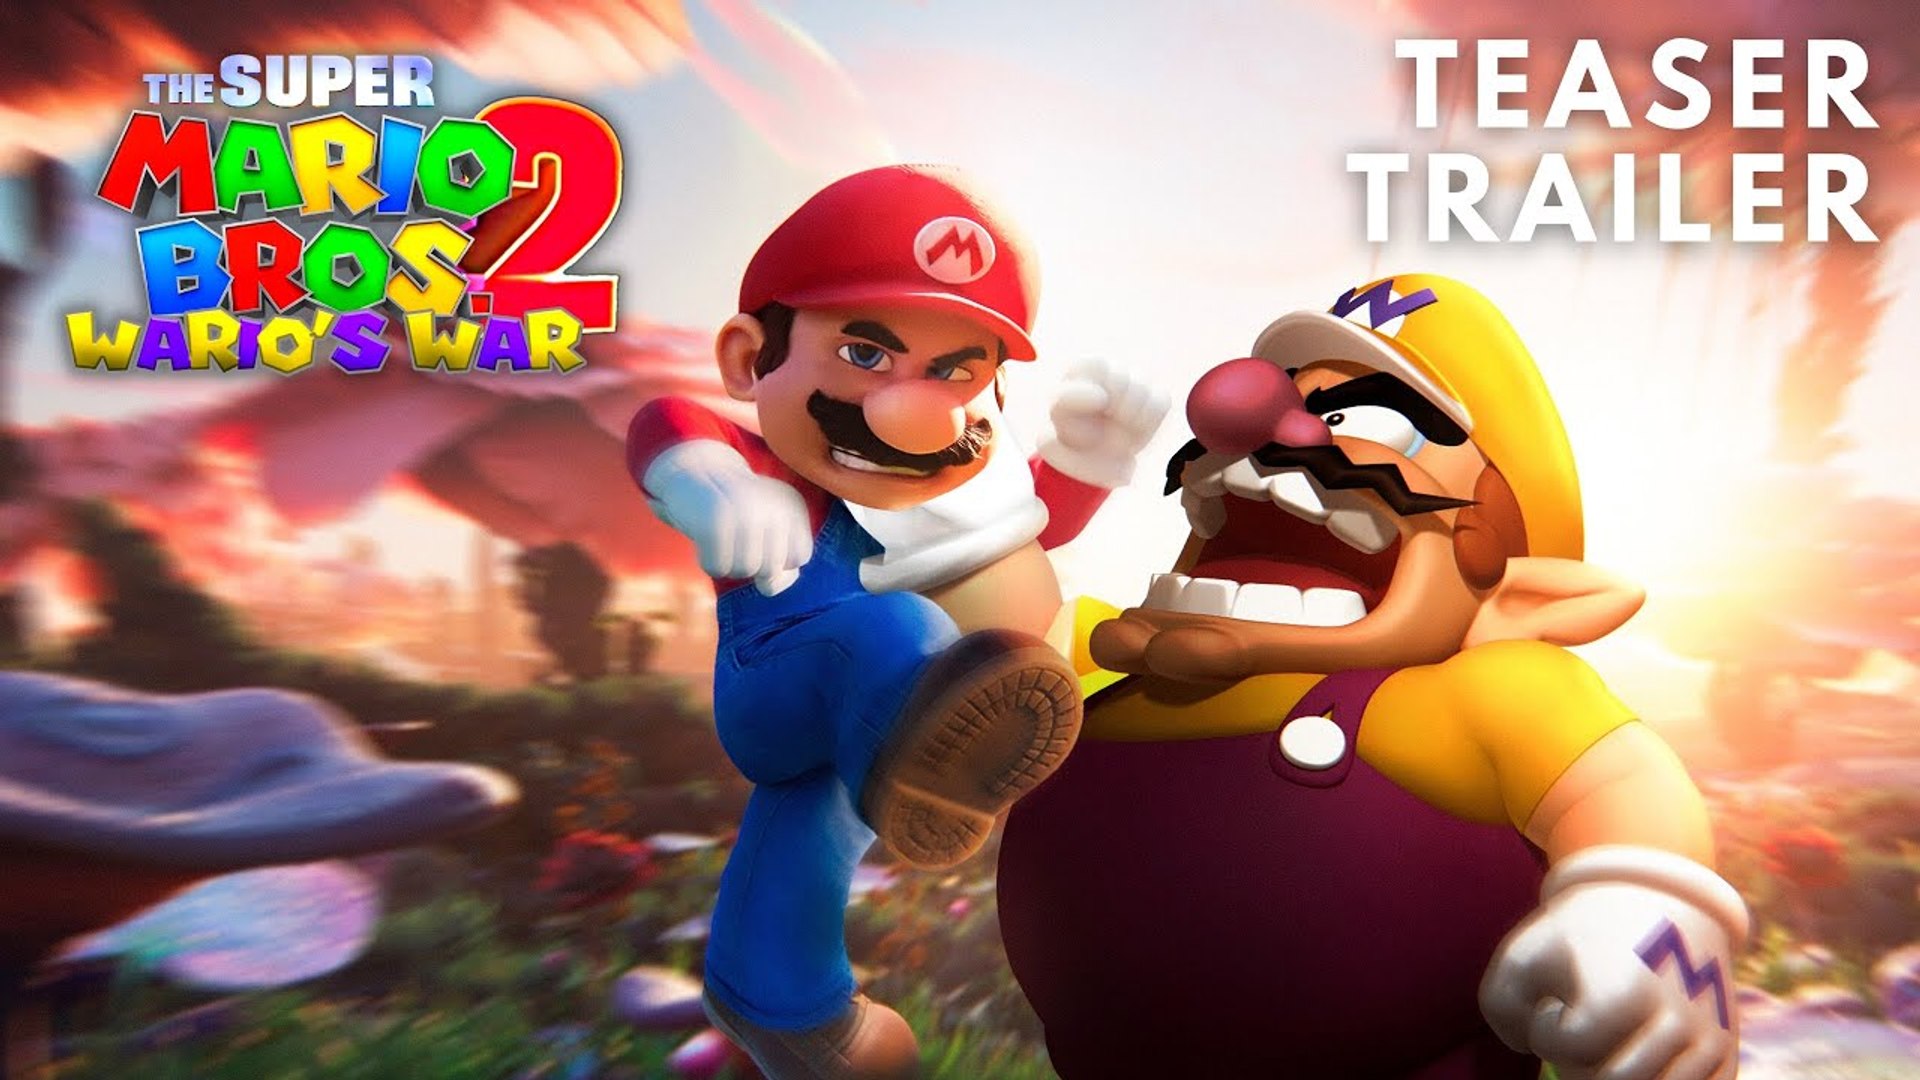 Game & Watch: Super Mario Bros. - Announcement Trailer 